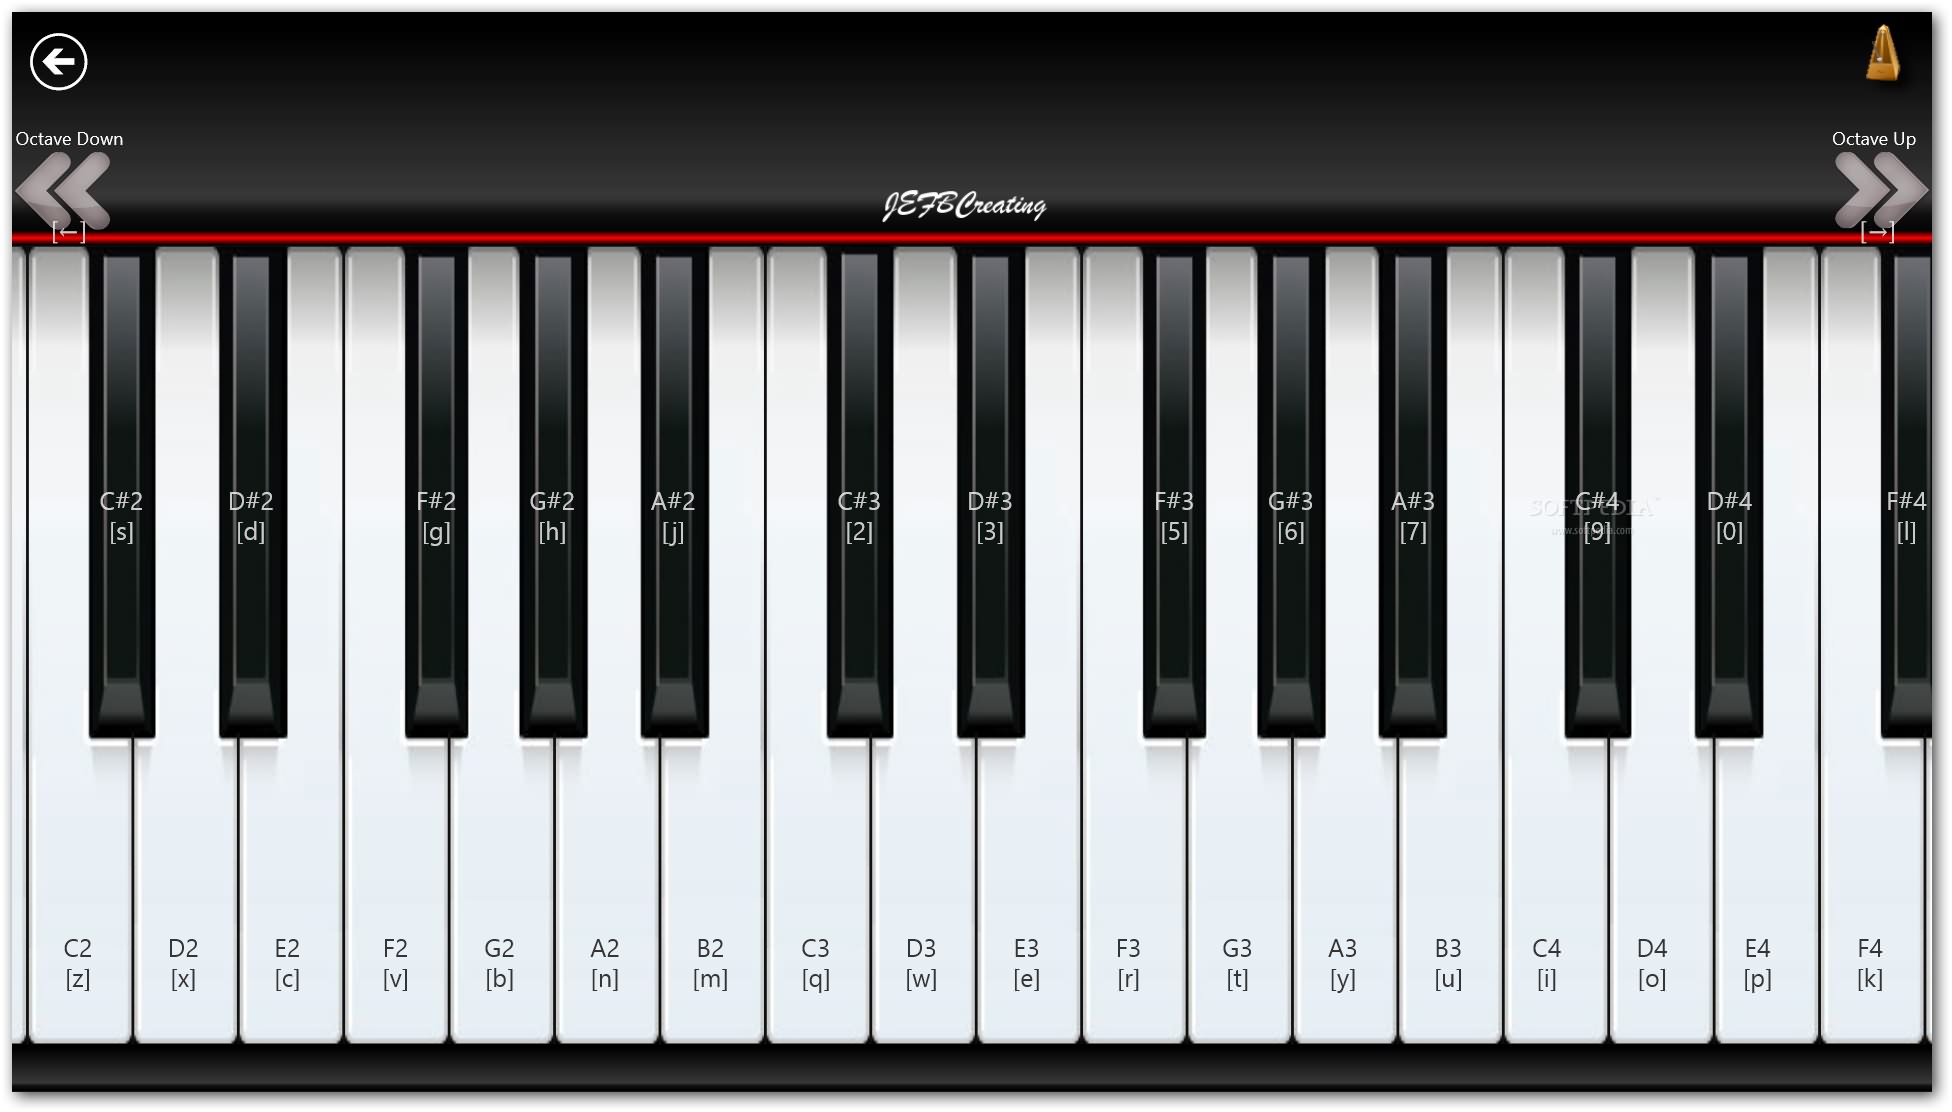 Piano8 - The application allows you to navigate through octaves via ...